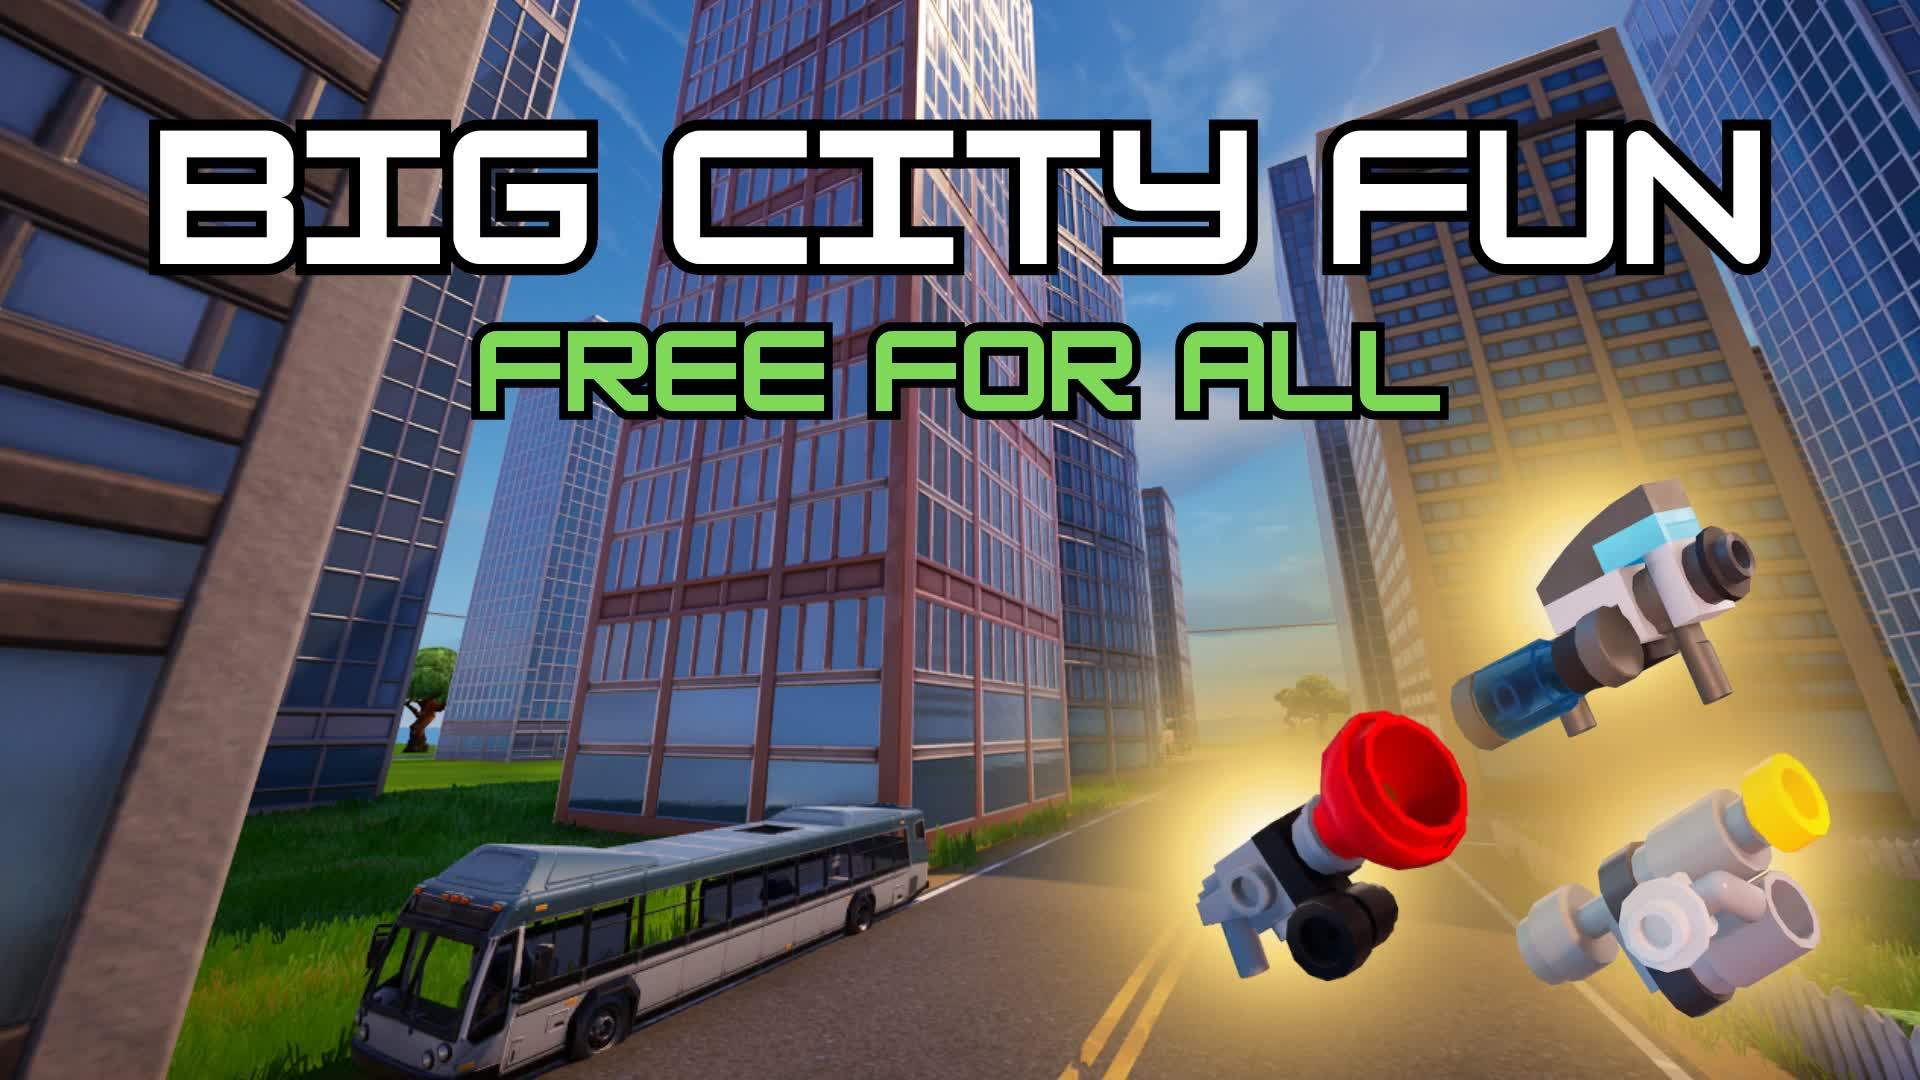 🏙️ Big City Fun - Free For All